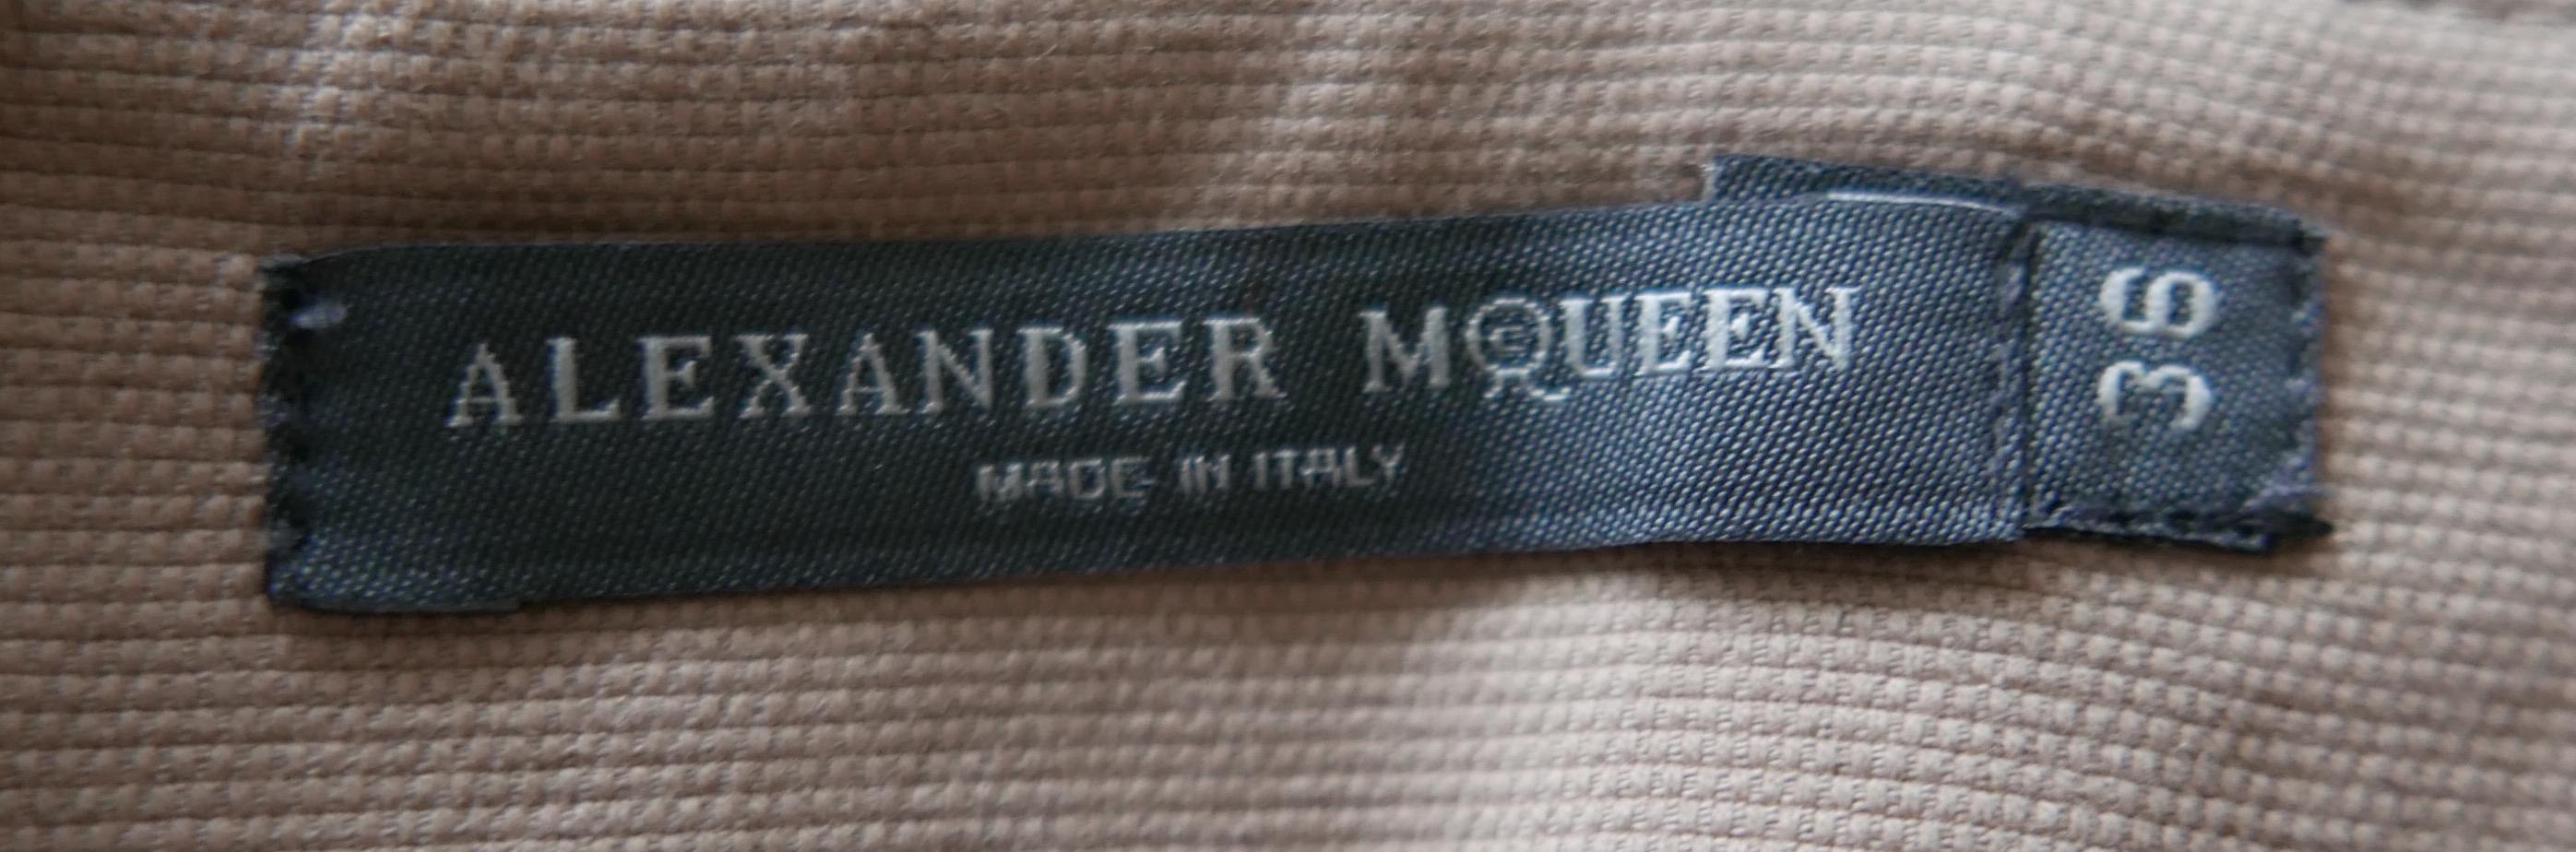 Alexander McQueen super flared skirt  For Sale 2